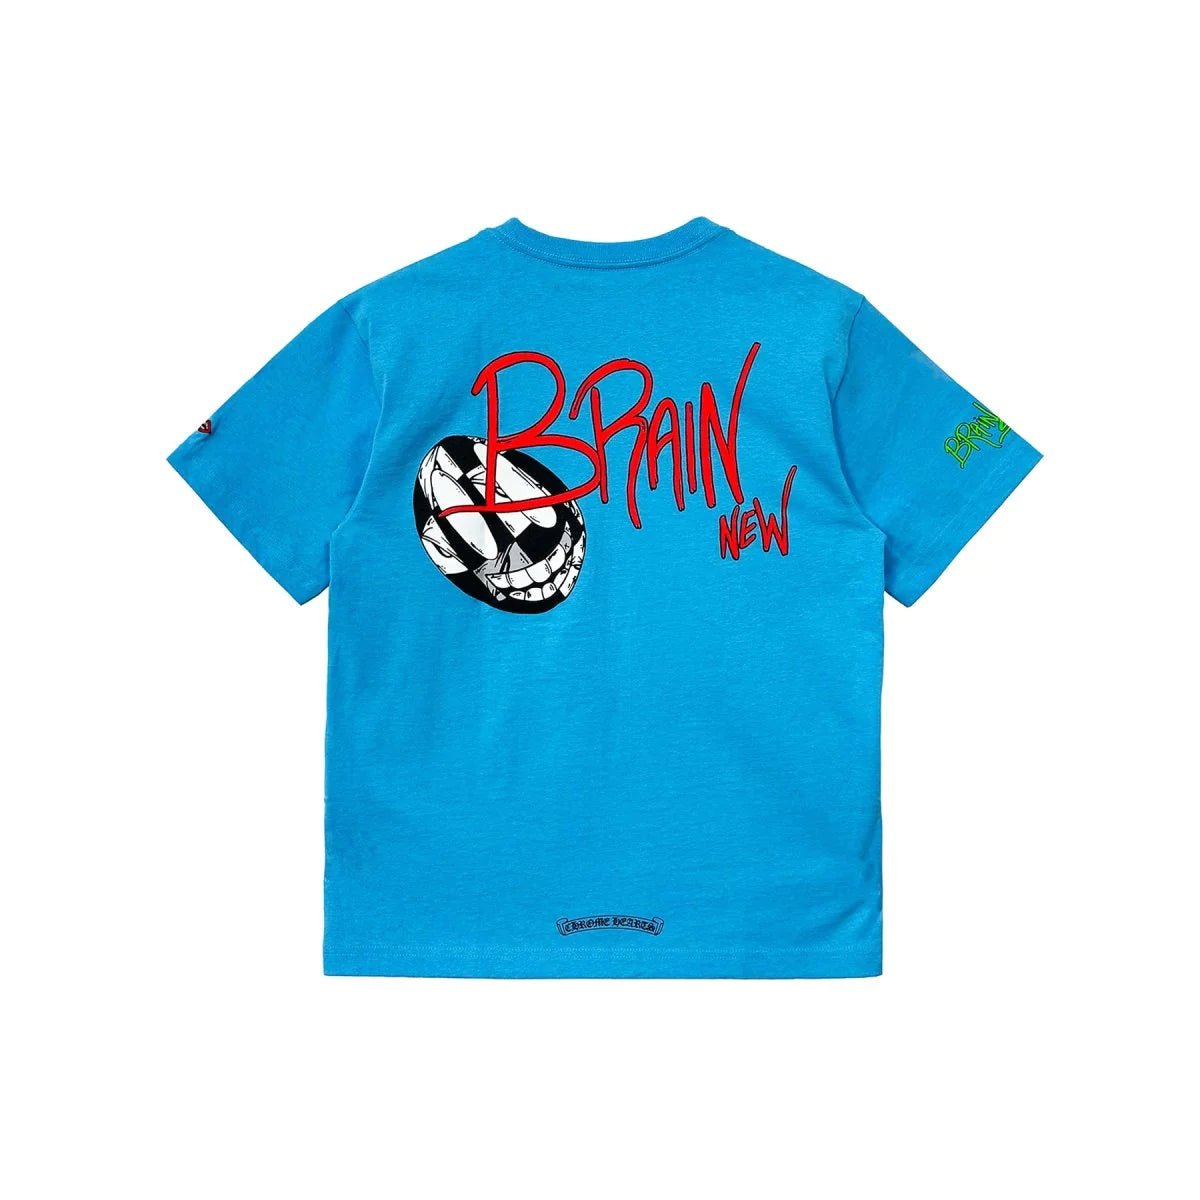 Chrome Hearts Matty Boy Brain New T-Shirt Blue - Supra Sneakers